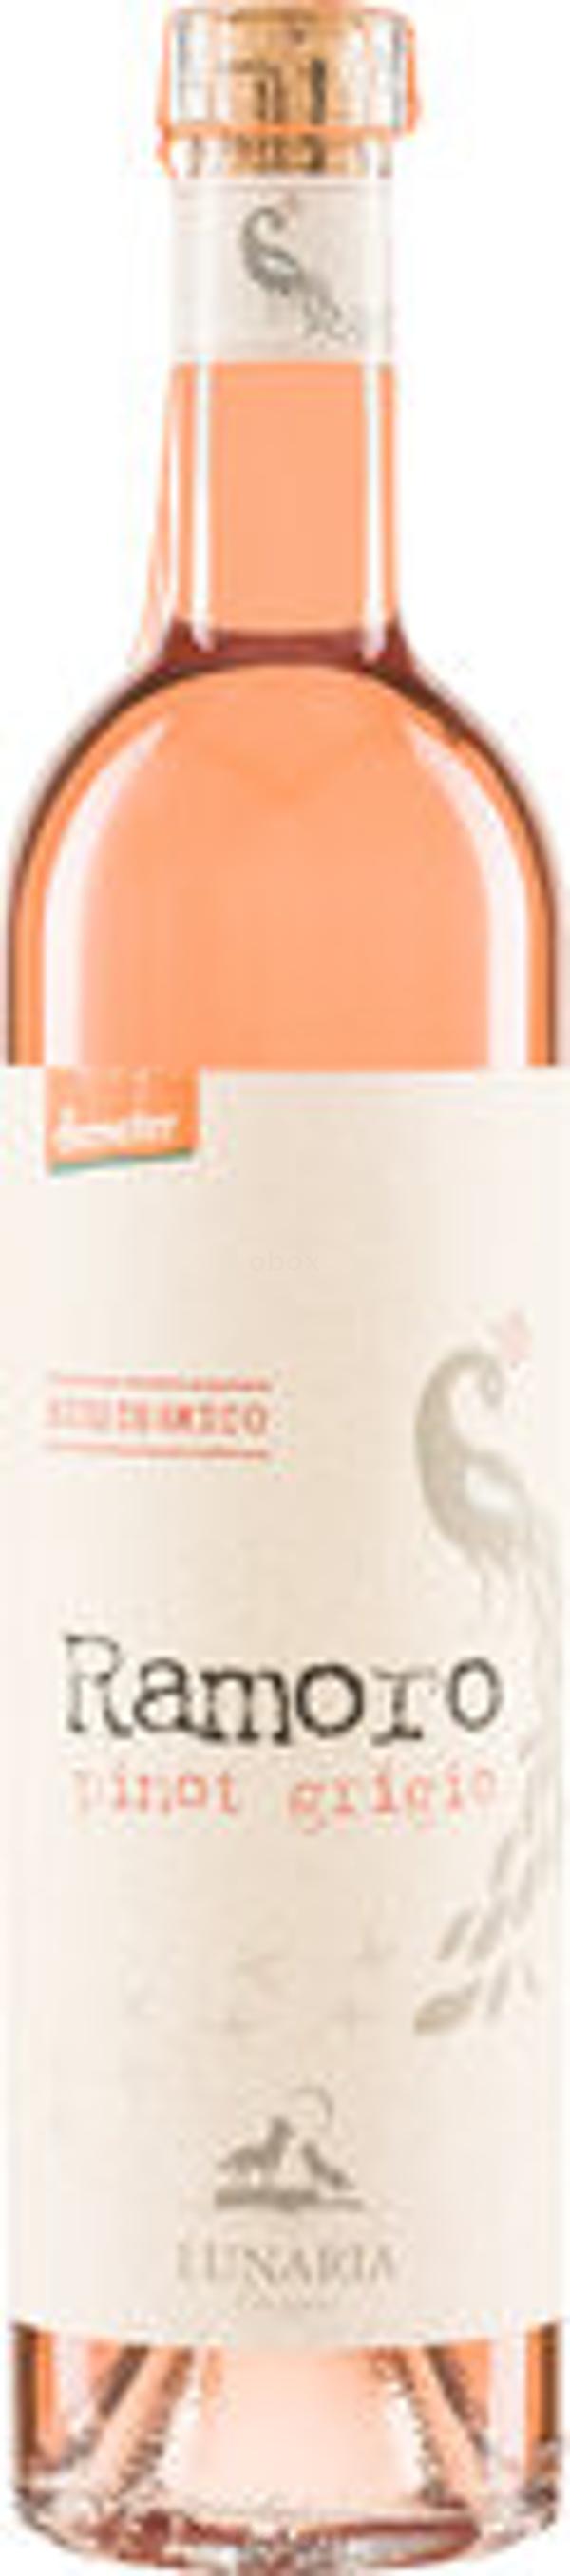 Produktfoto zu Ramoro Pinot Grigio weiß